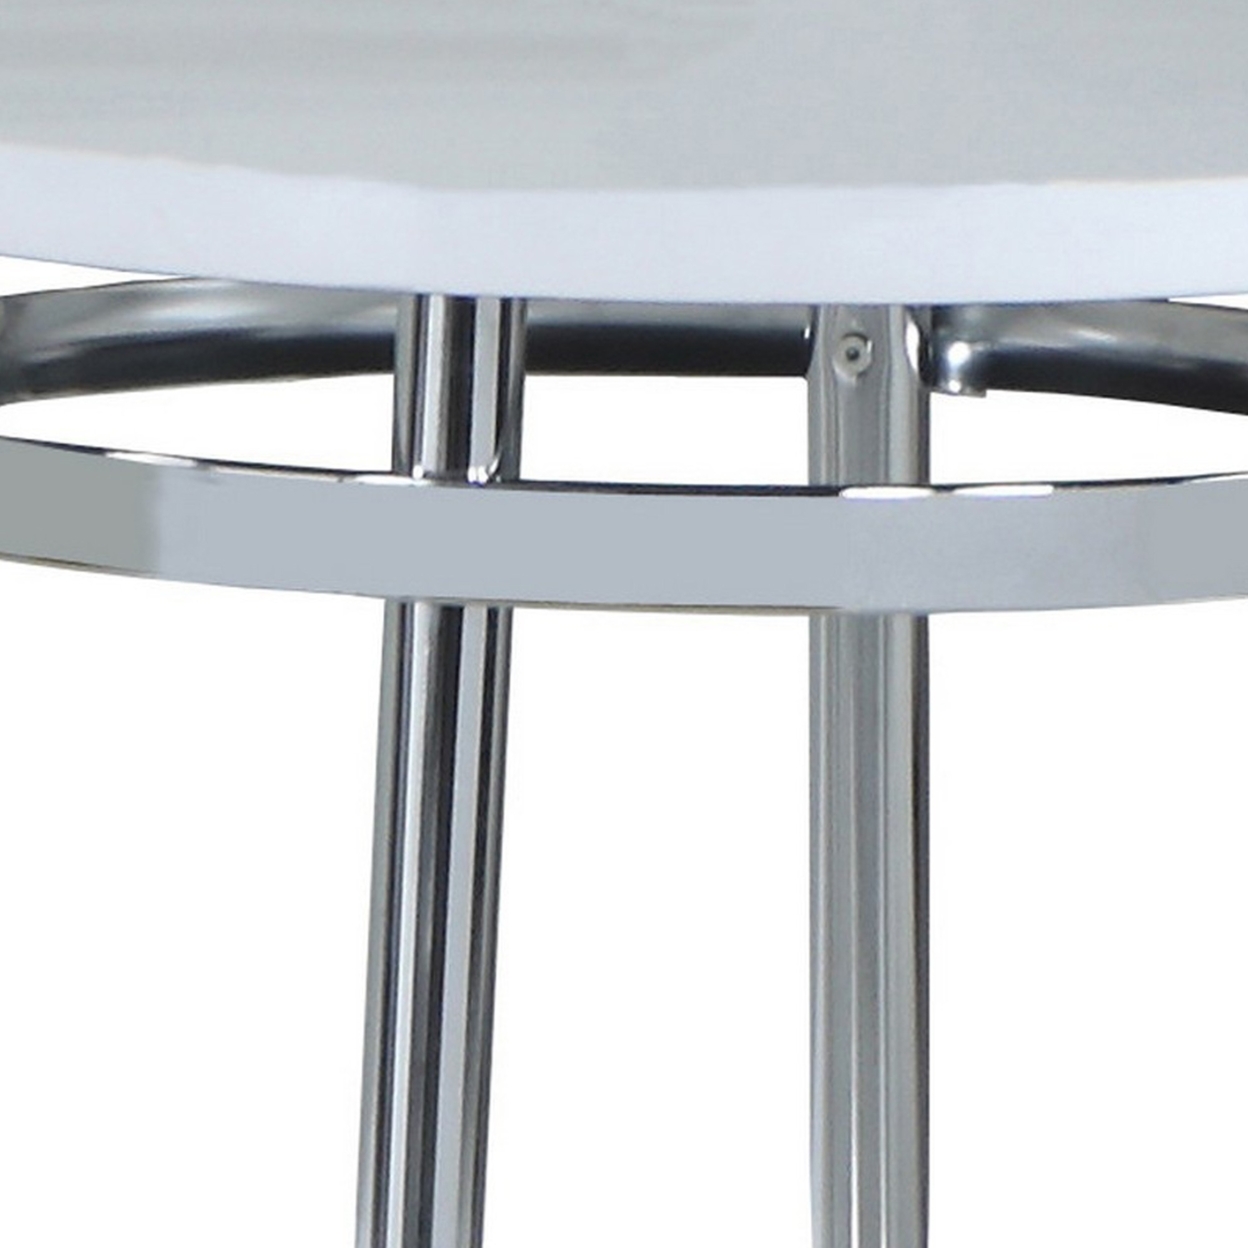 Round Faux Marble Top End Table With Metal Tubular Legs, White- Saltoro Sherpi